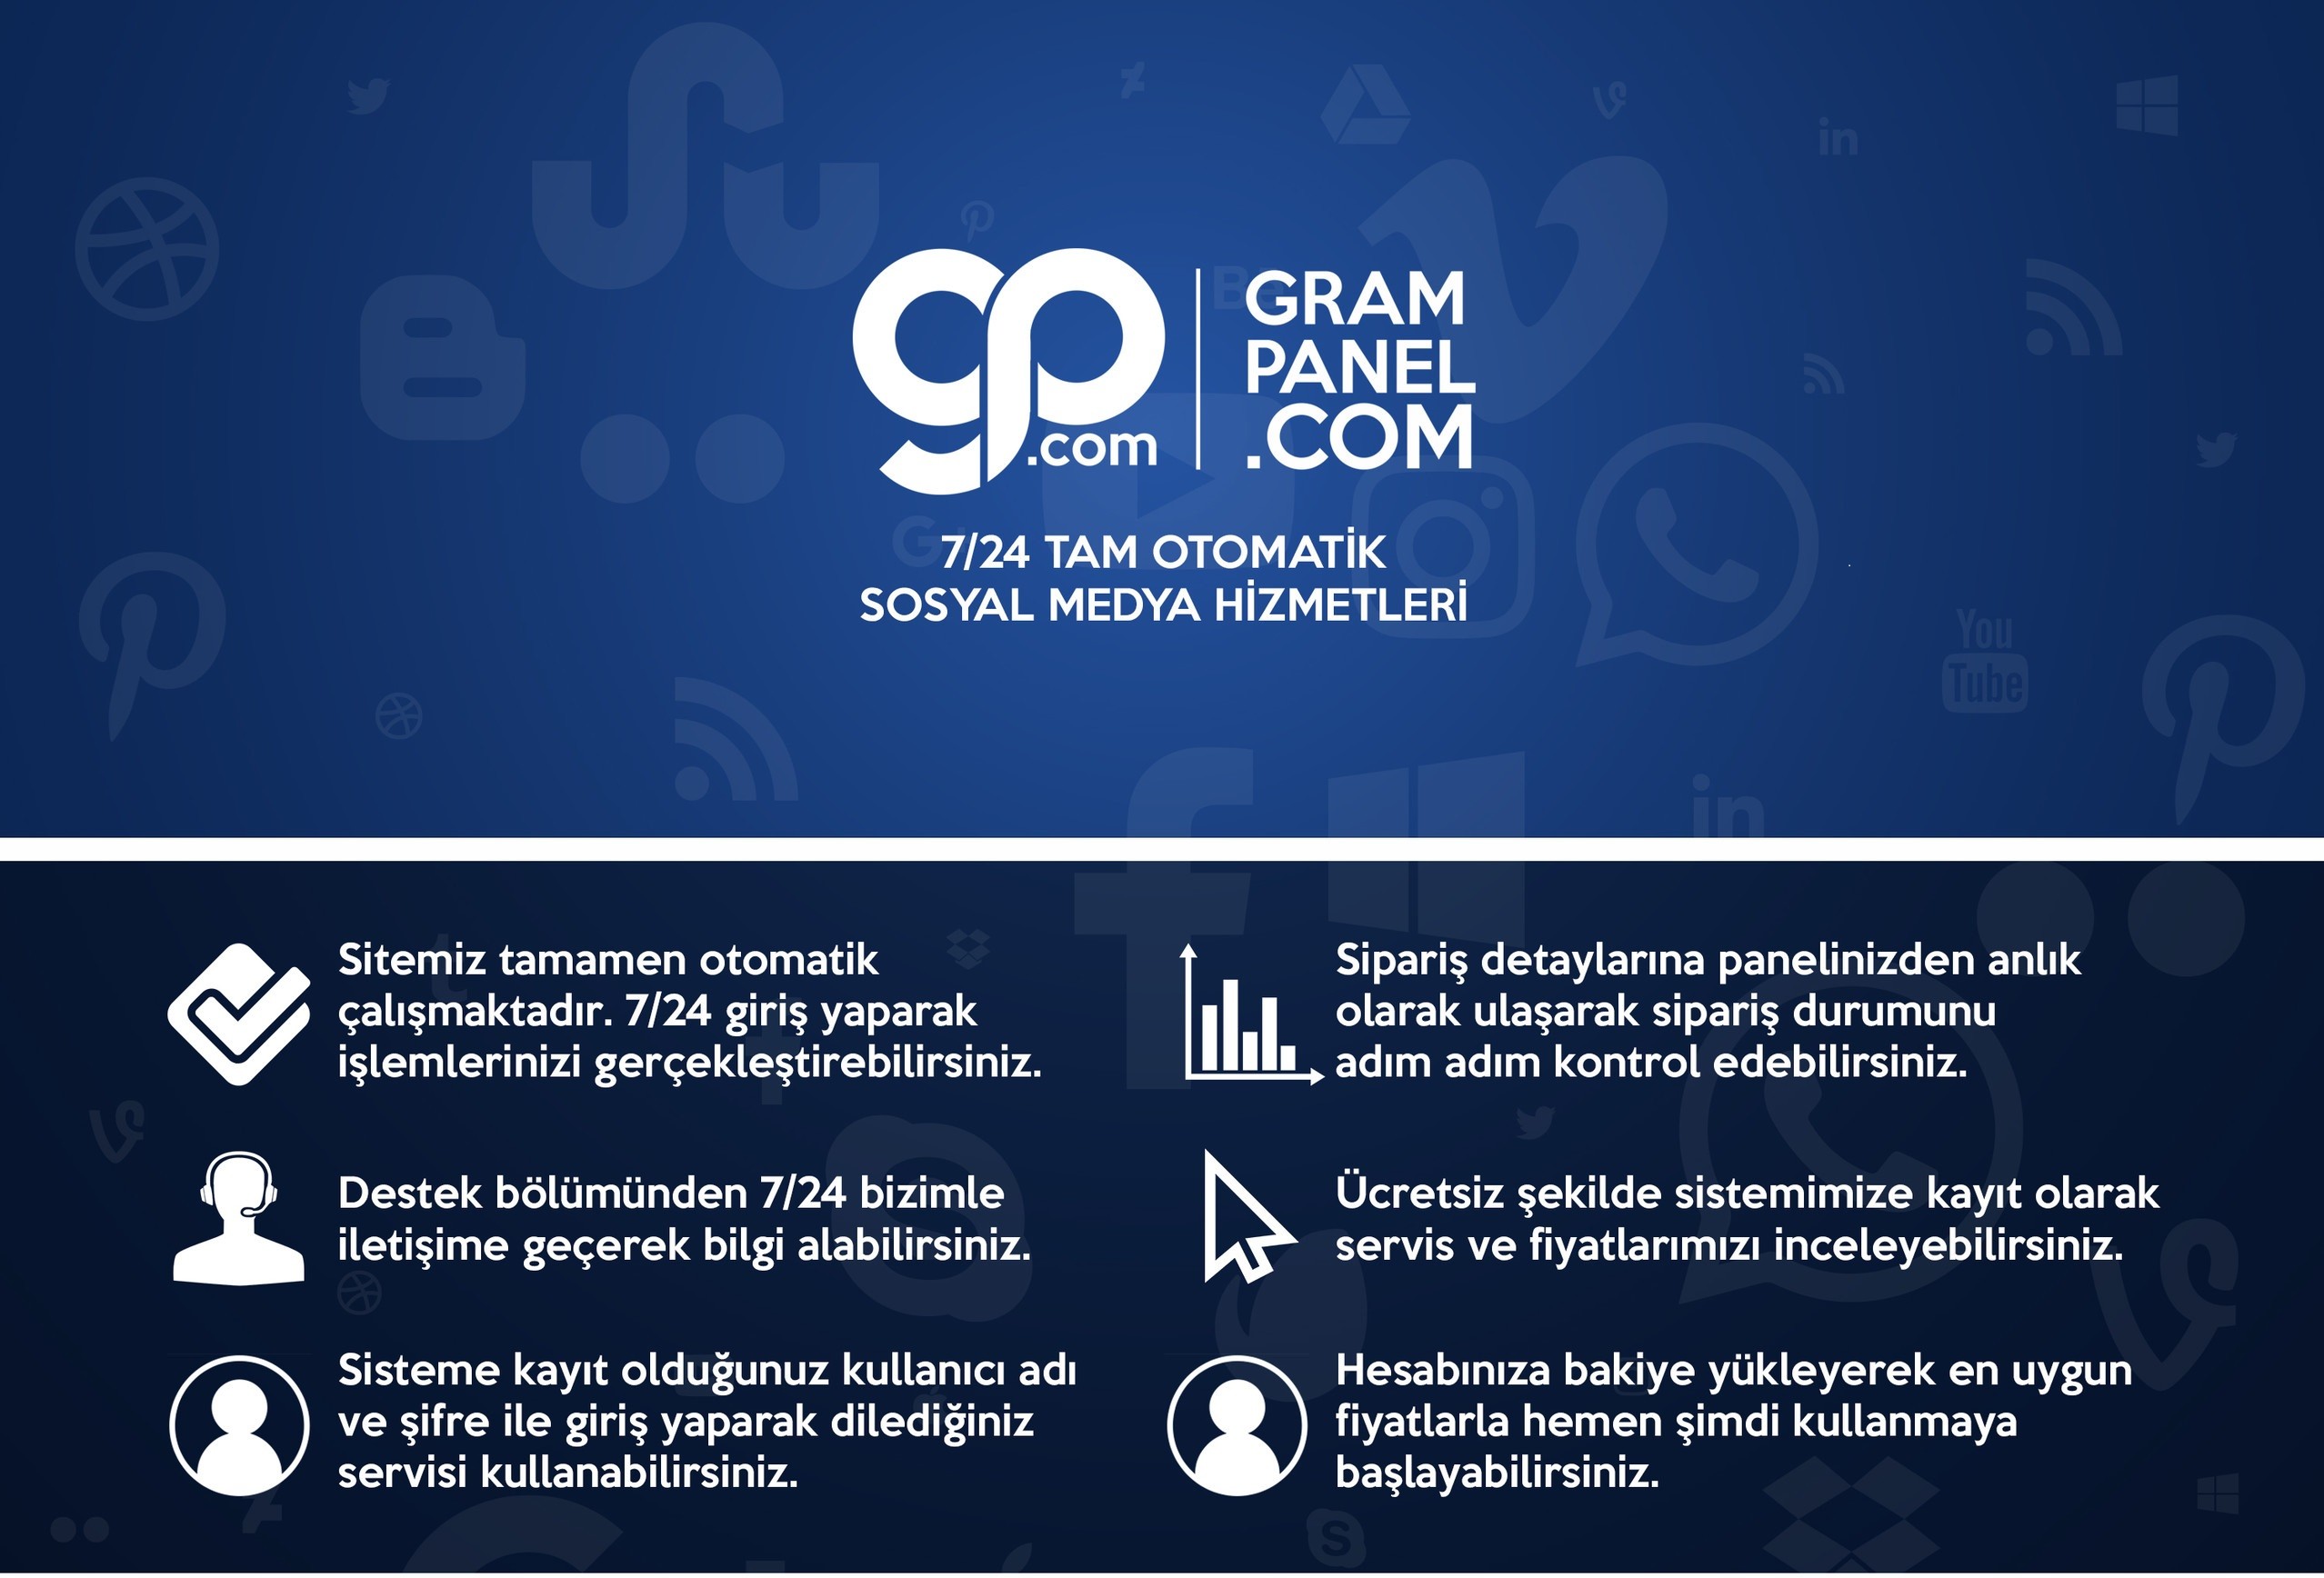 grampanel.com ' Tam Otomatik Sosyal Medya Paneli '